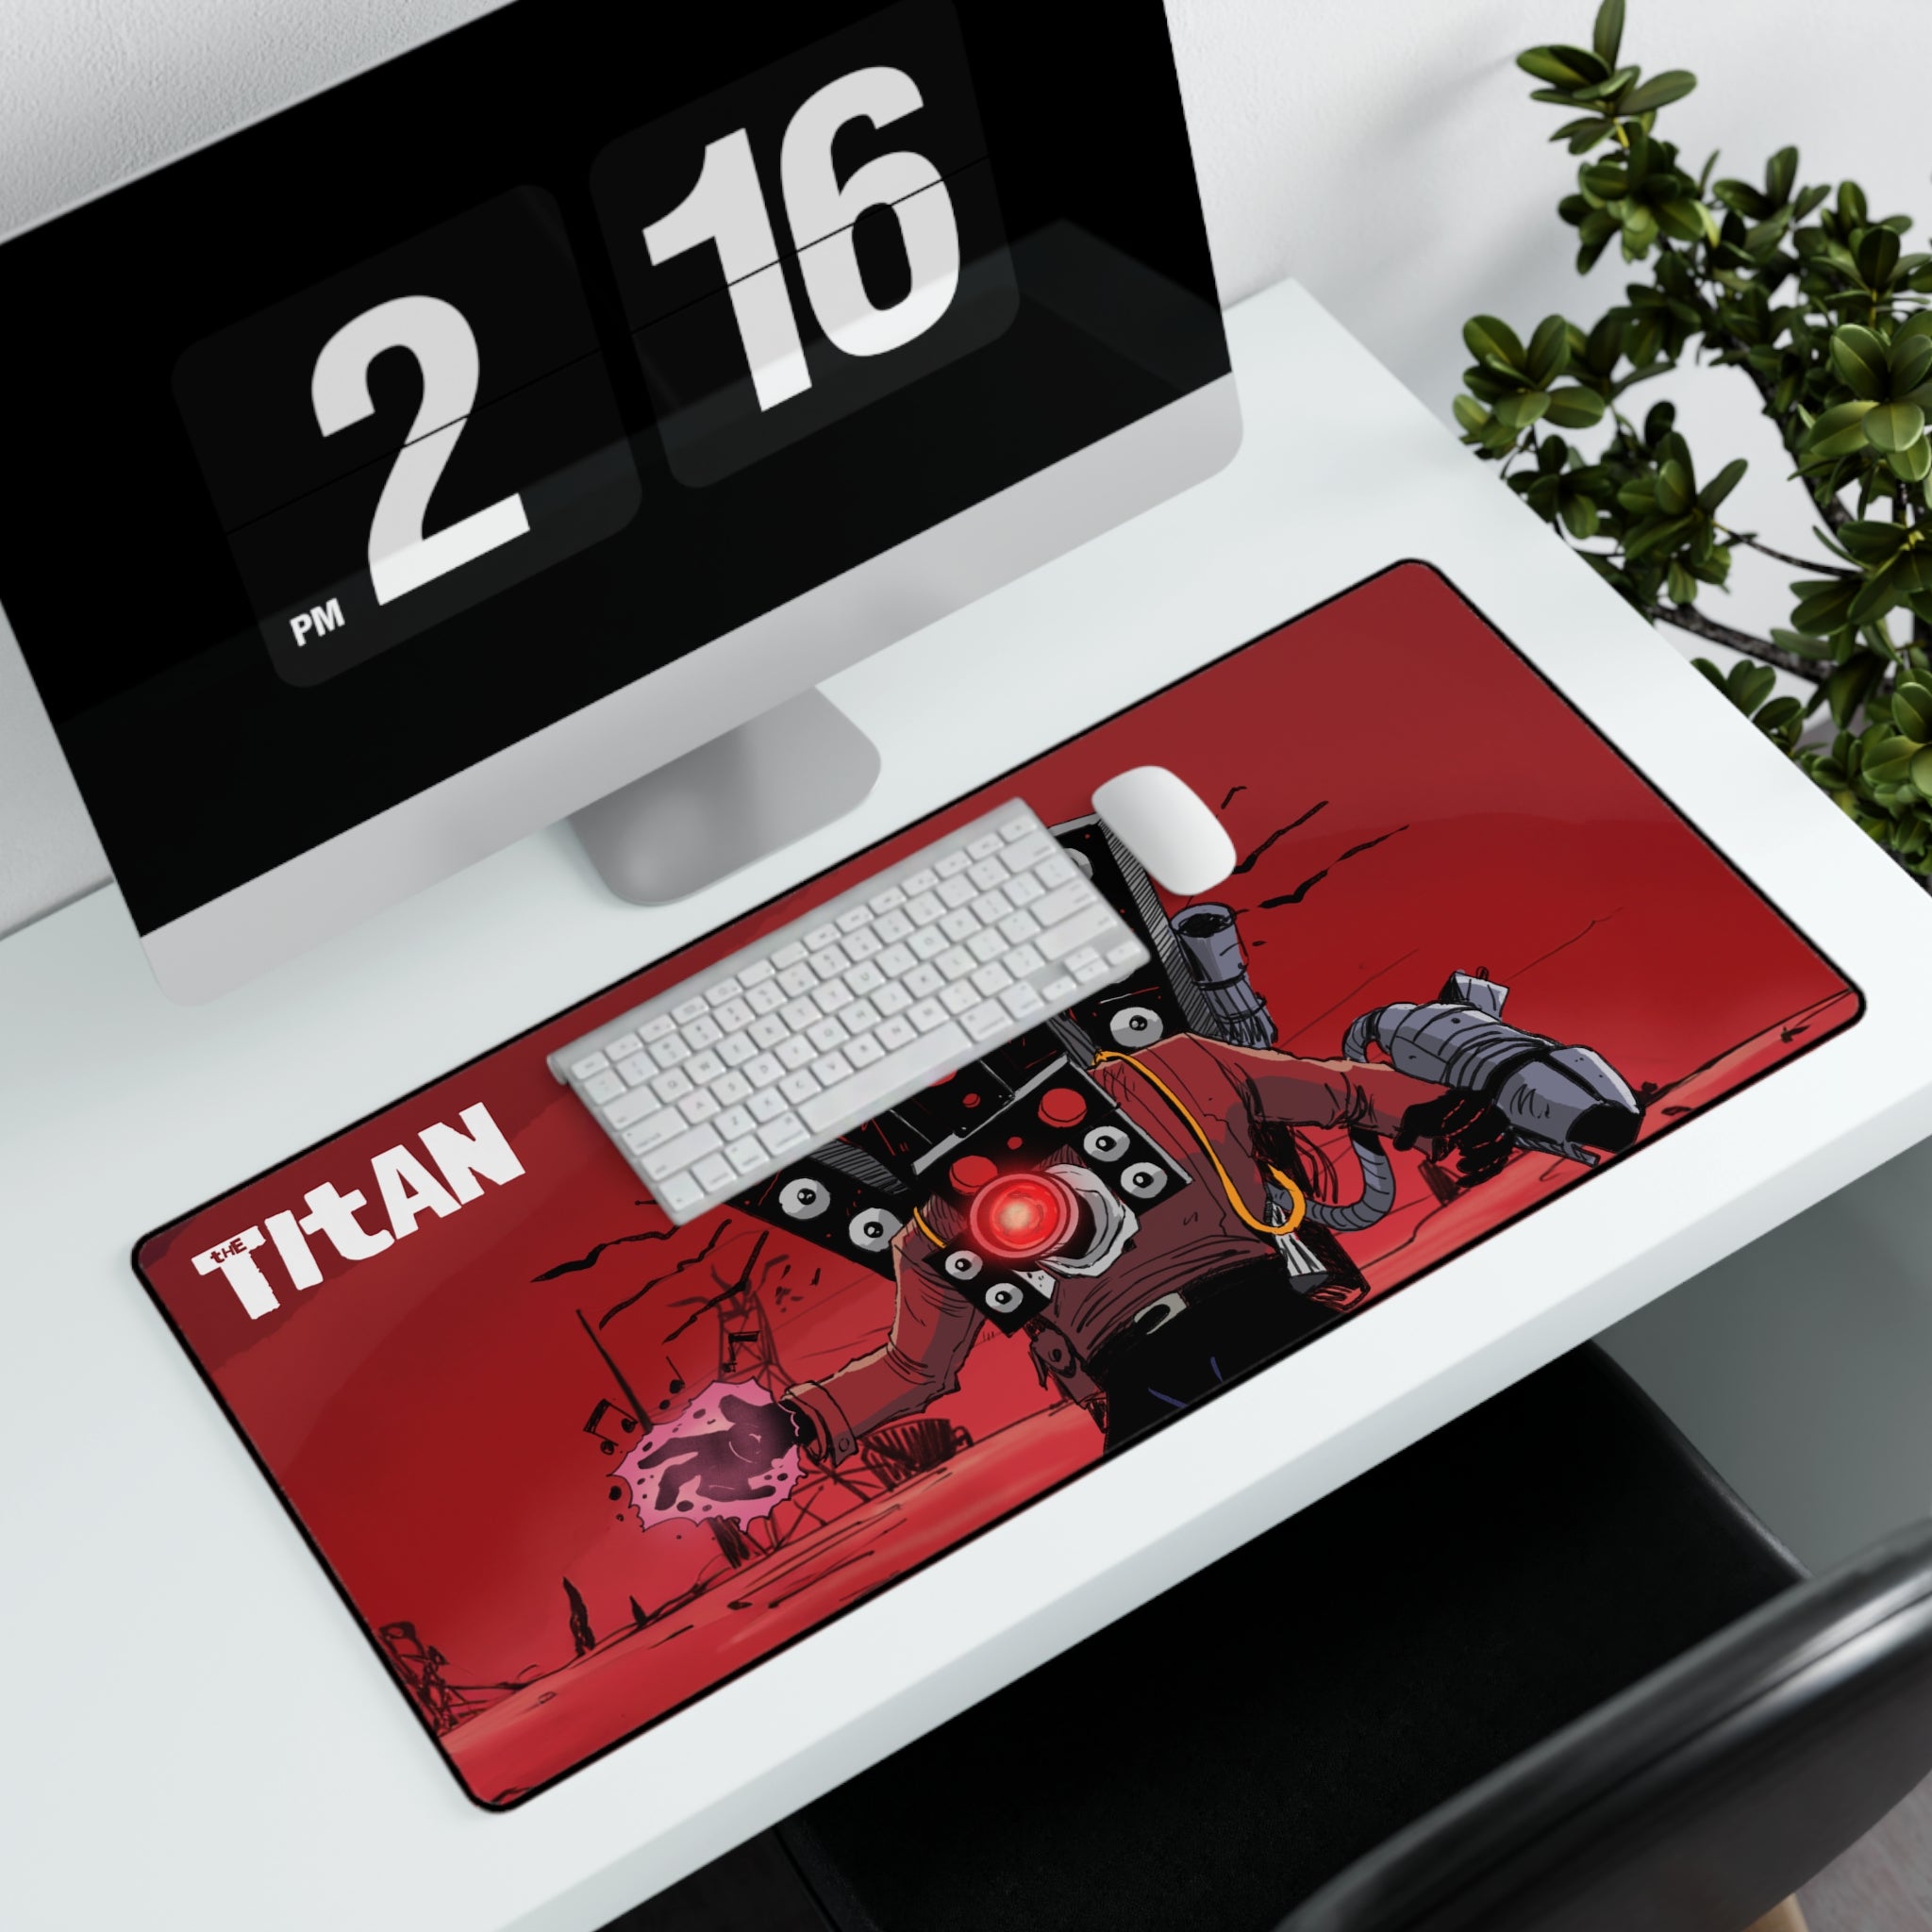 Titan Speakerman - High Voltage Gaming Mouse Pad